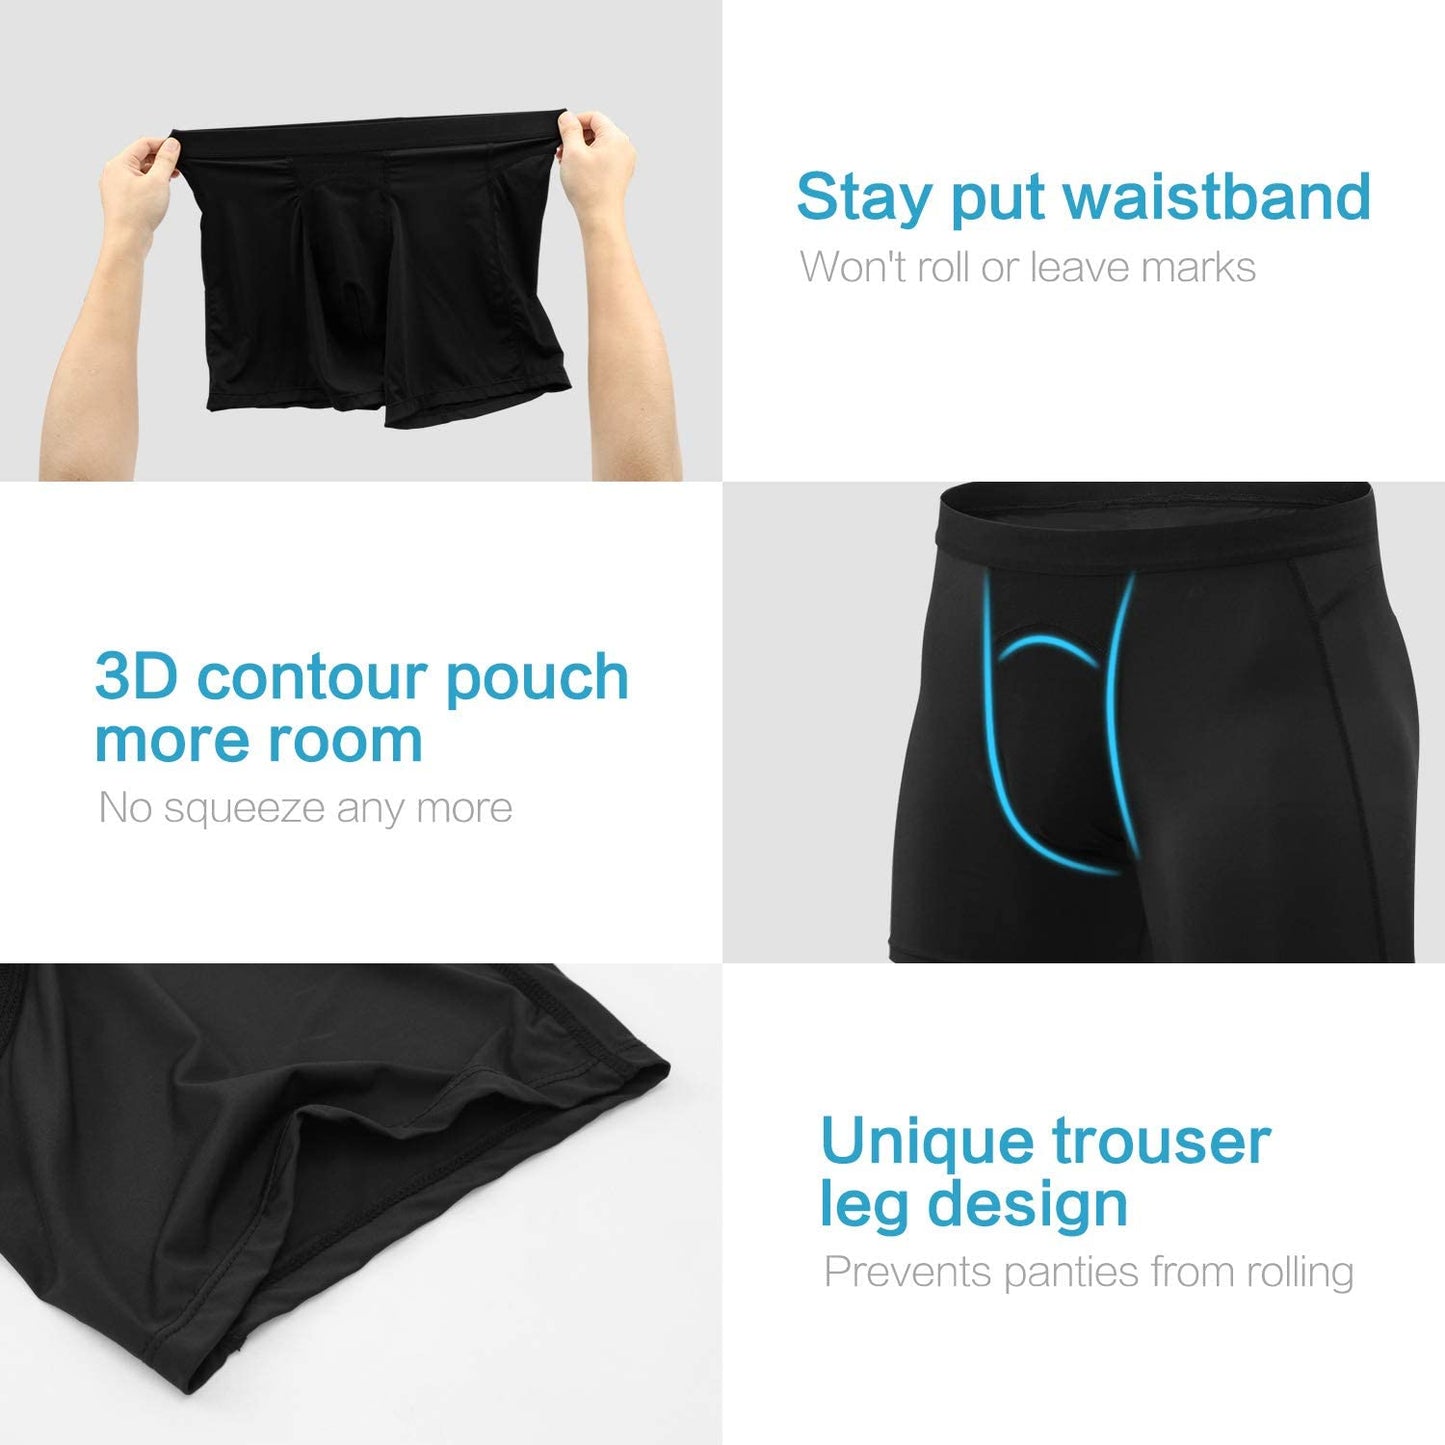 Sports underwear with comfortable design